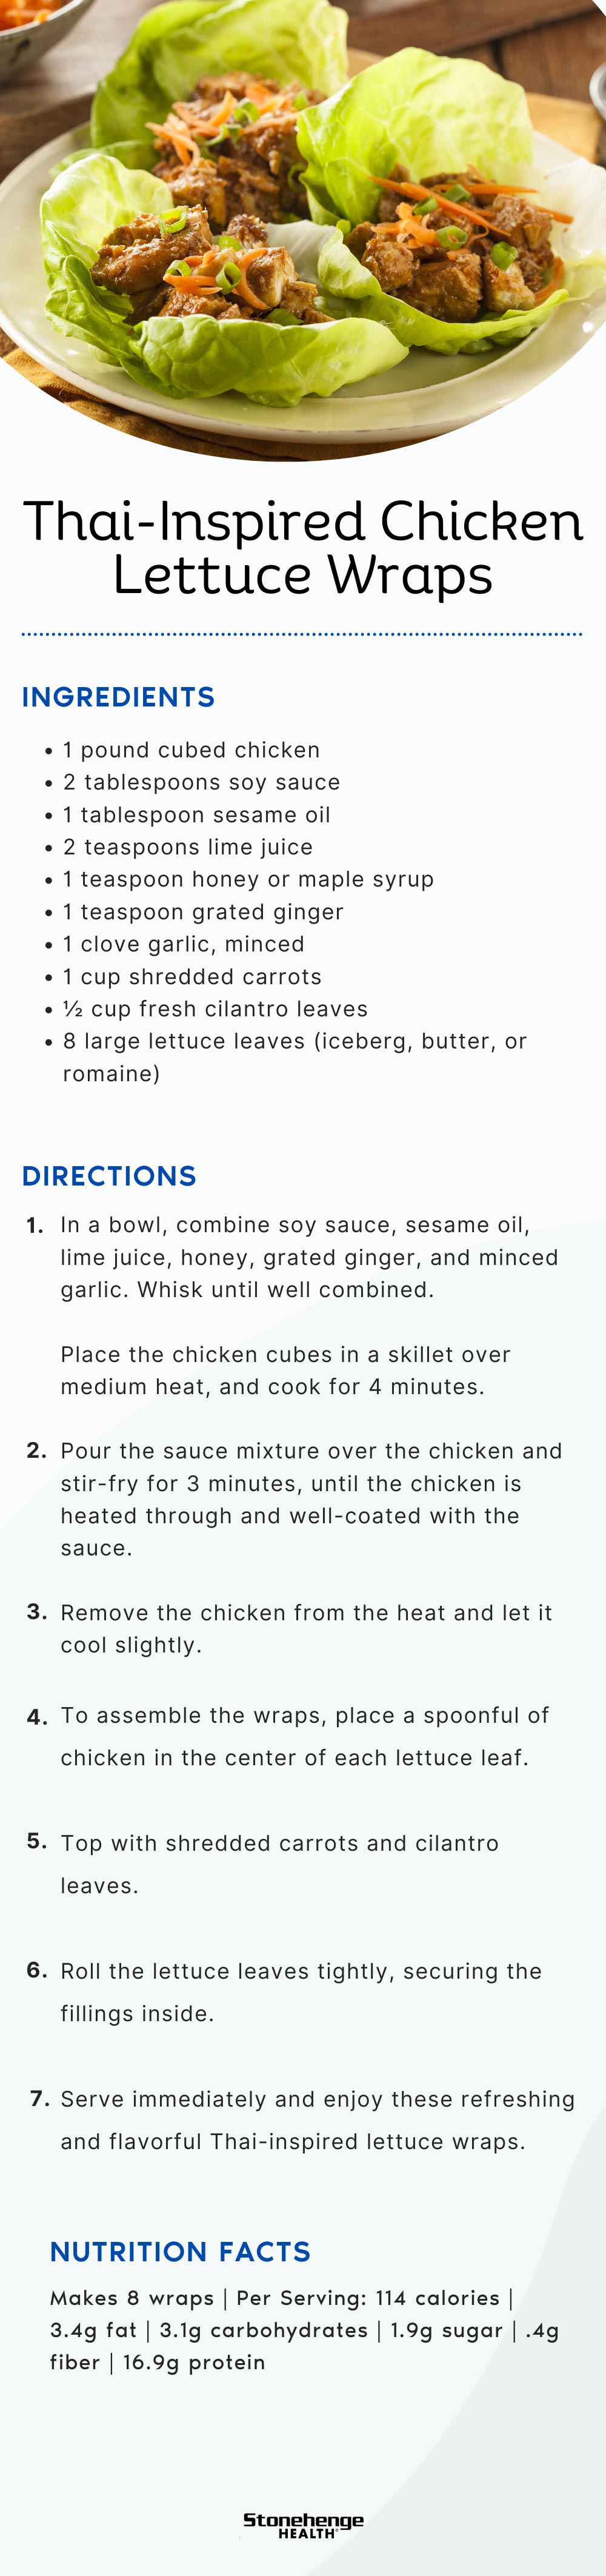 Thai Inspired Chicken Lettuce Wraps Recipe - Stonehenge Health